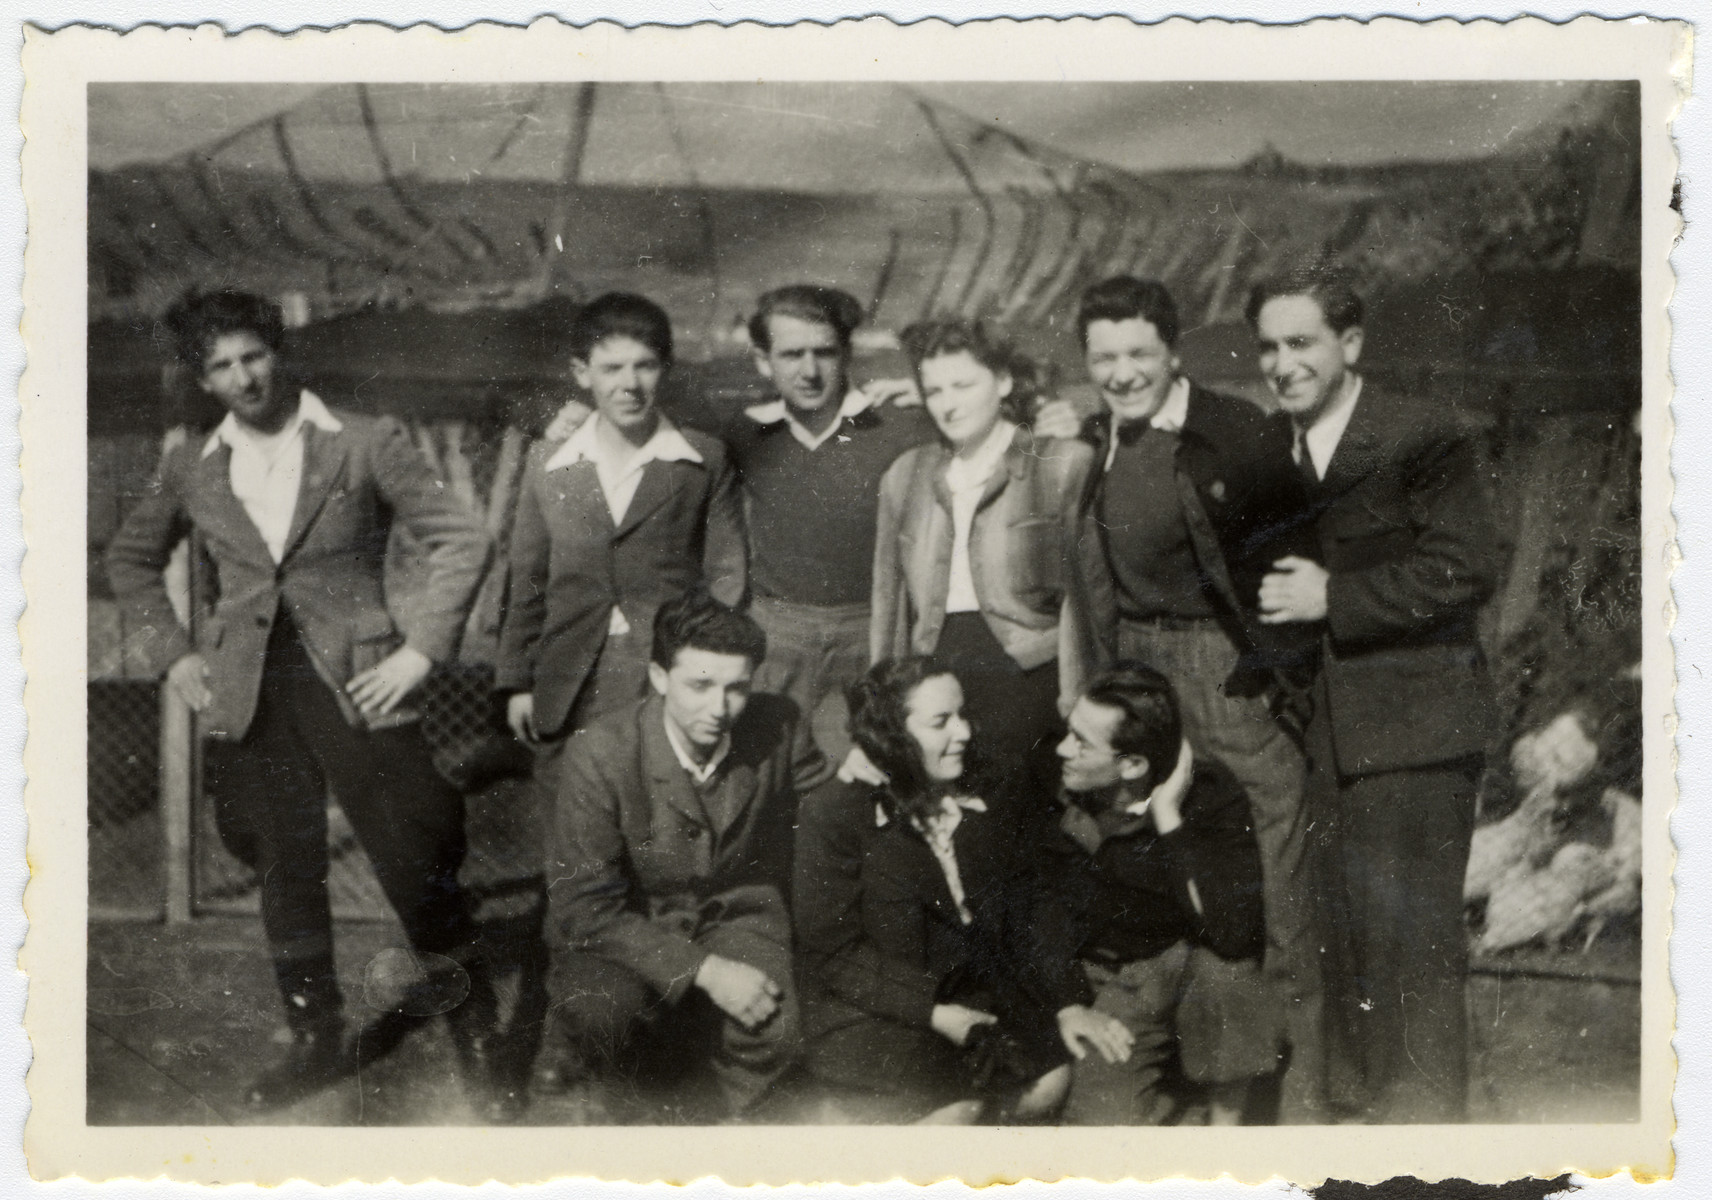 Group portrait of members of Kibbutz Havivah Reik  at Echwege.

Willy Bogler stands in at center.